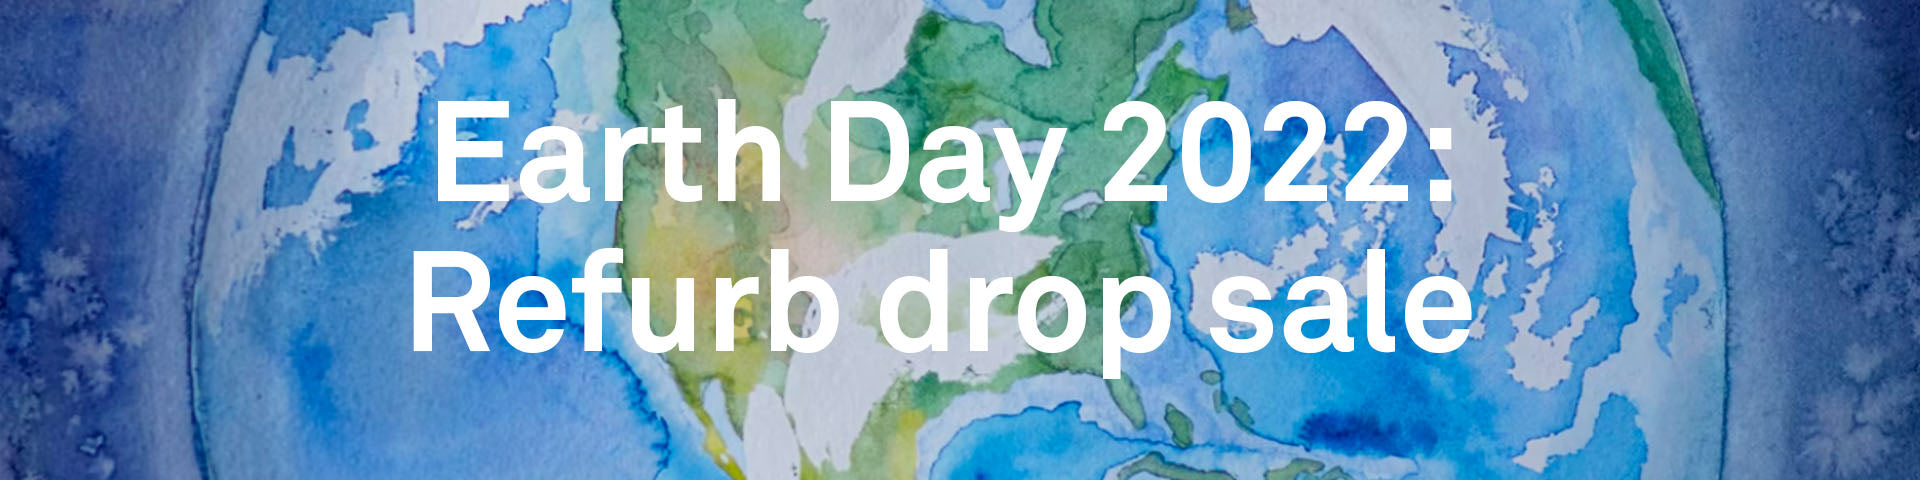 Earth Day 2022: Refurb drop sale